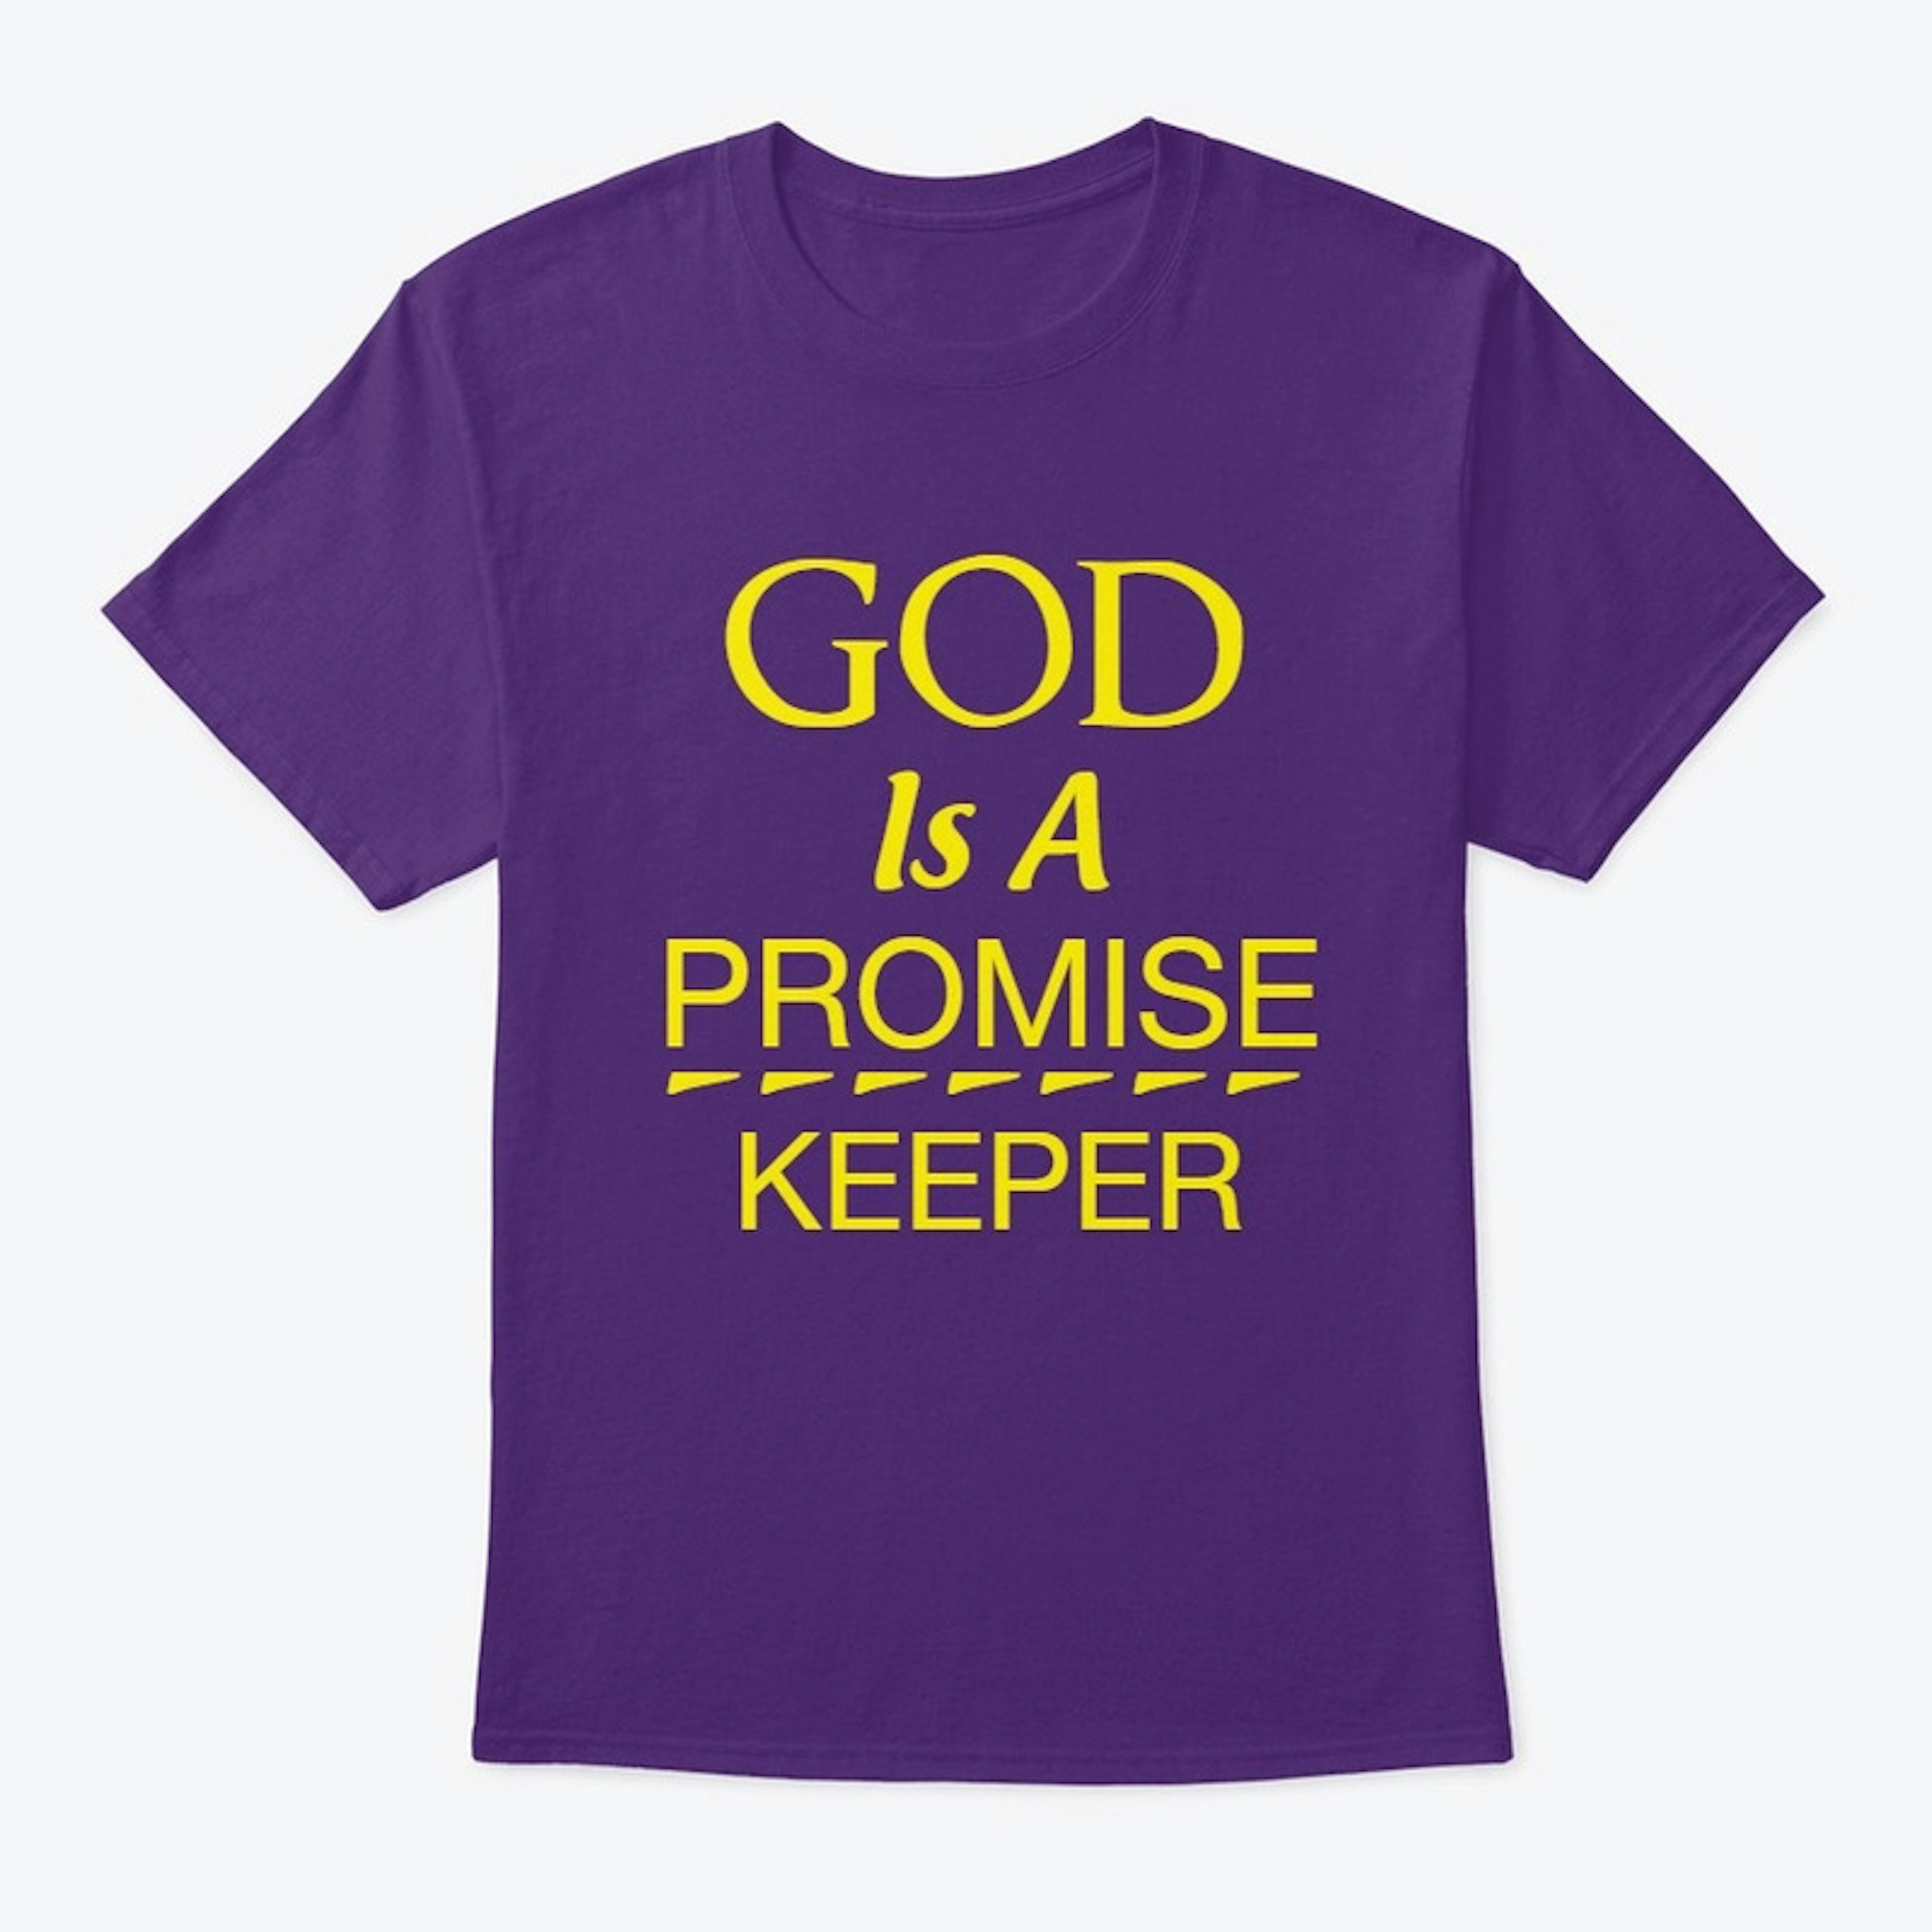 God Is A Promis Keeper Tees